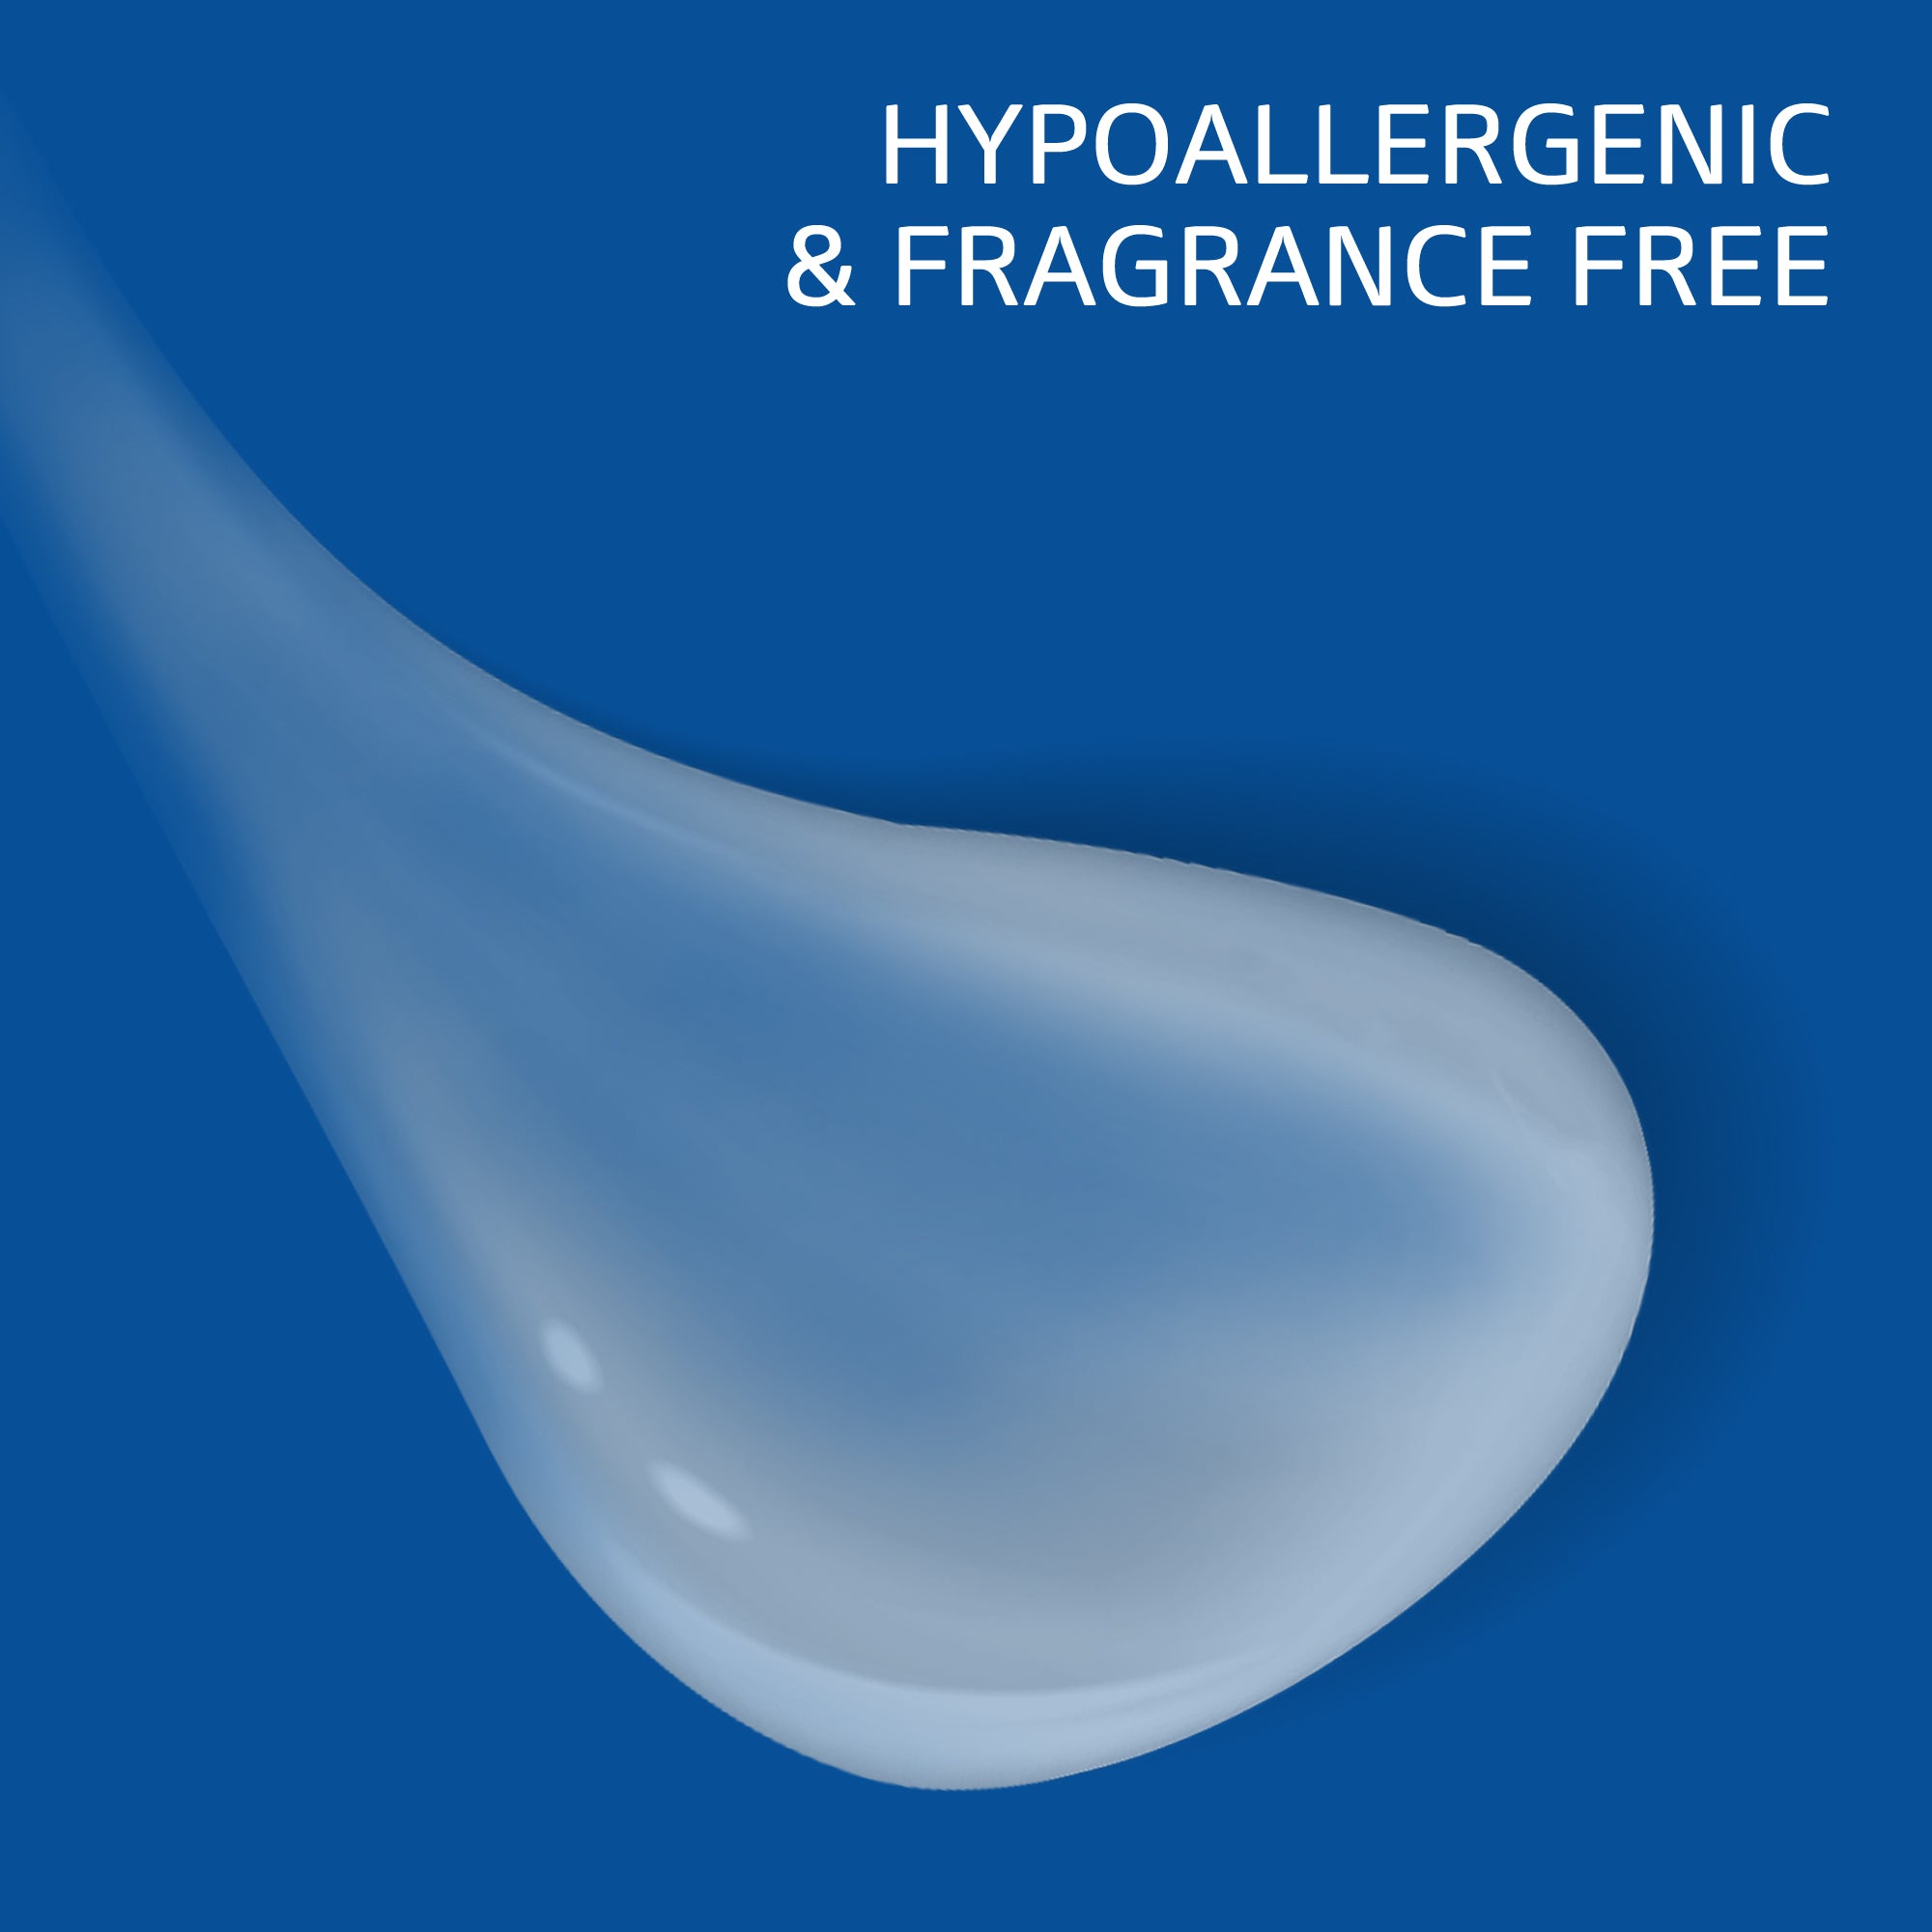 Cetaphil Gentle Skin Cleanser, Hydrating Face Wash & Body Wash, Ideal for Sensitive, Dry Skin, Fragrance-Free, 8 fl oz